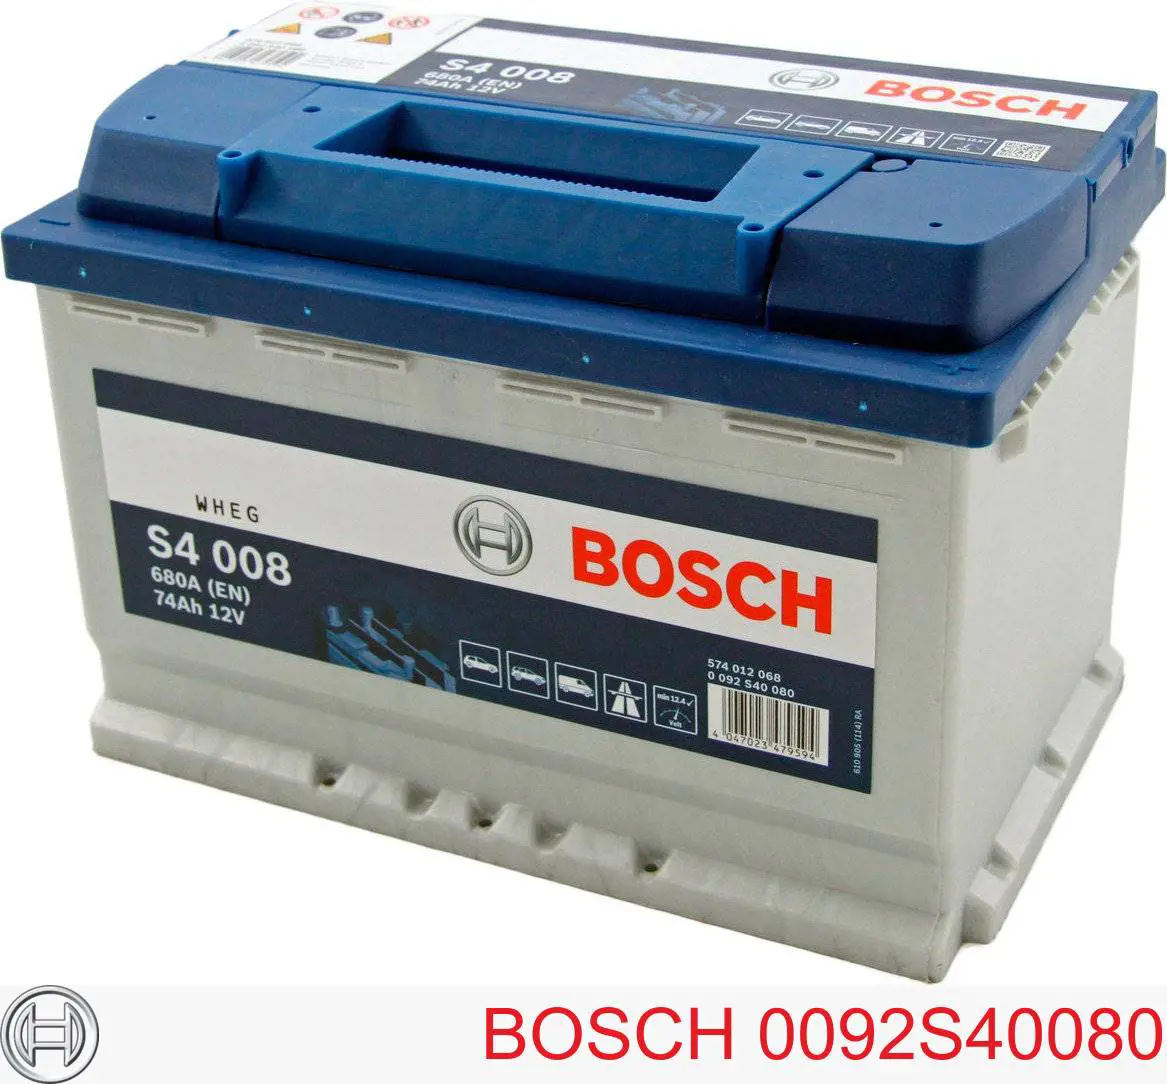 Bosch: S4008 0092S40080 Steco: Exide: EB740 Dynamic: 4 Proxivolt